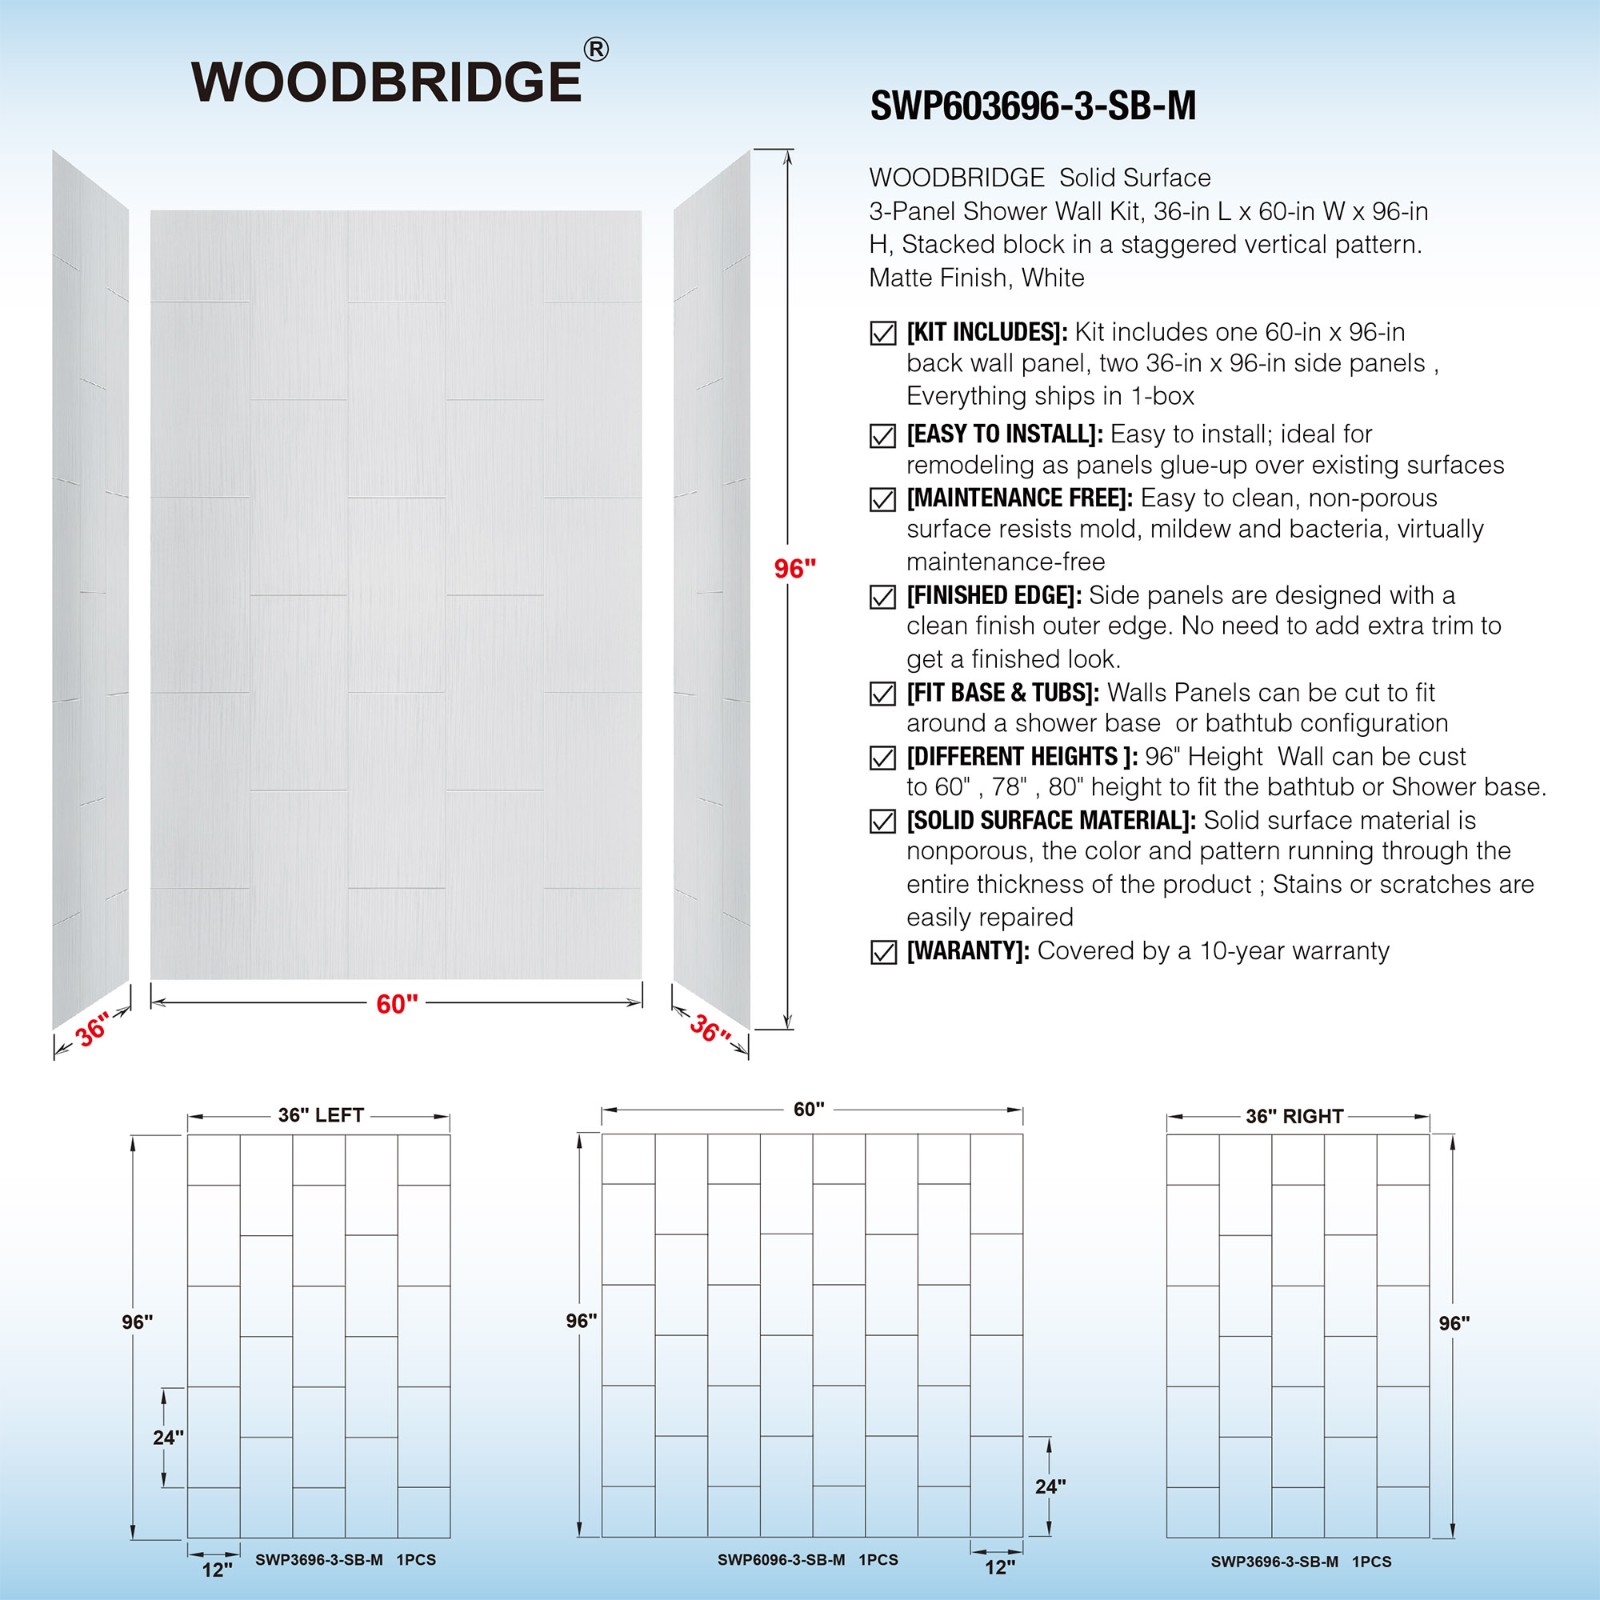  WOODBRIDGE SWP603696-3-SB-M Solid Surface 3-Panel Shower Wall Kit, 36-in L x 60-in W x 96-in H, Stacked Block in a Staggered Vertical Pattern. Matte Finish, White_8460